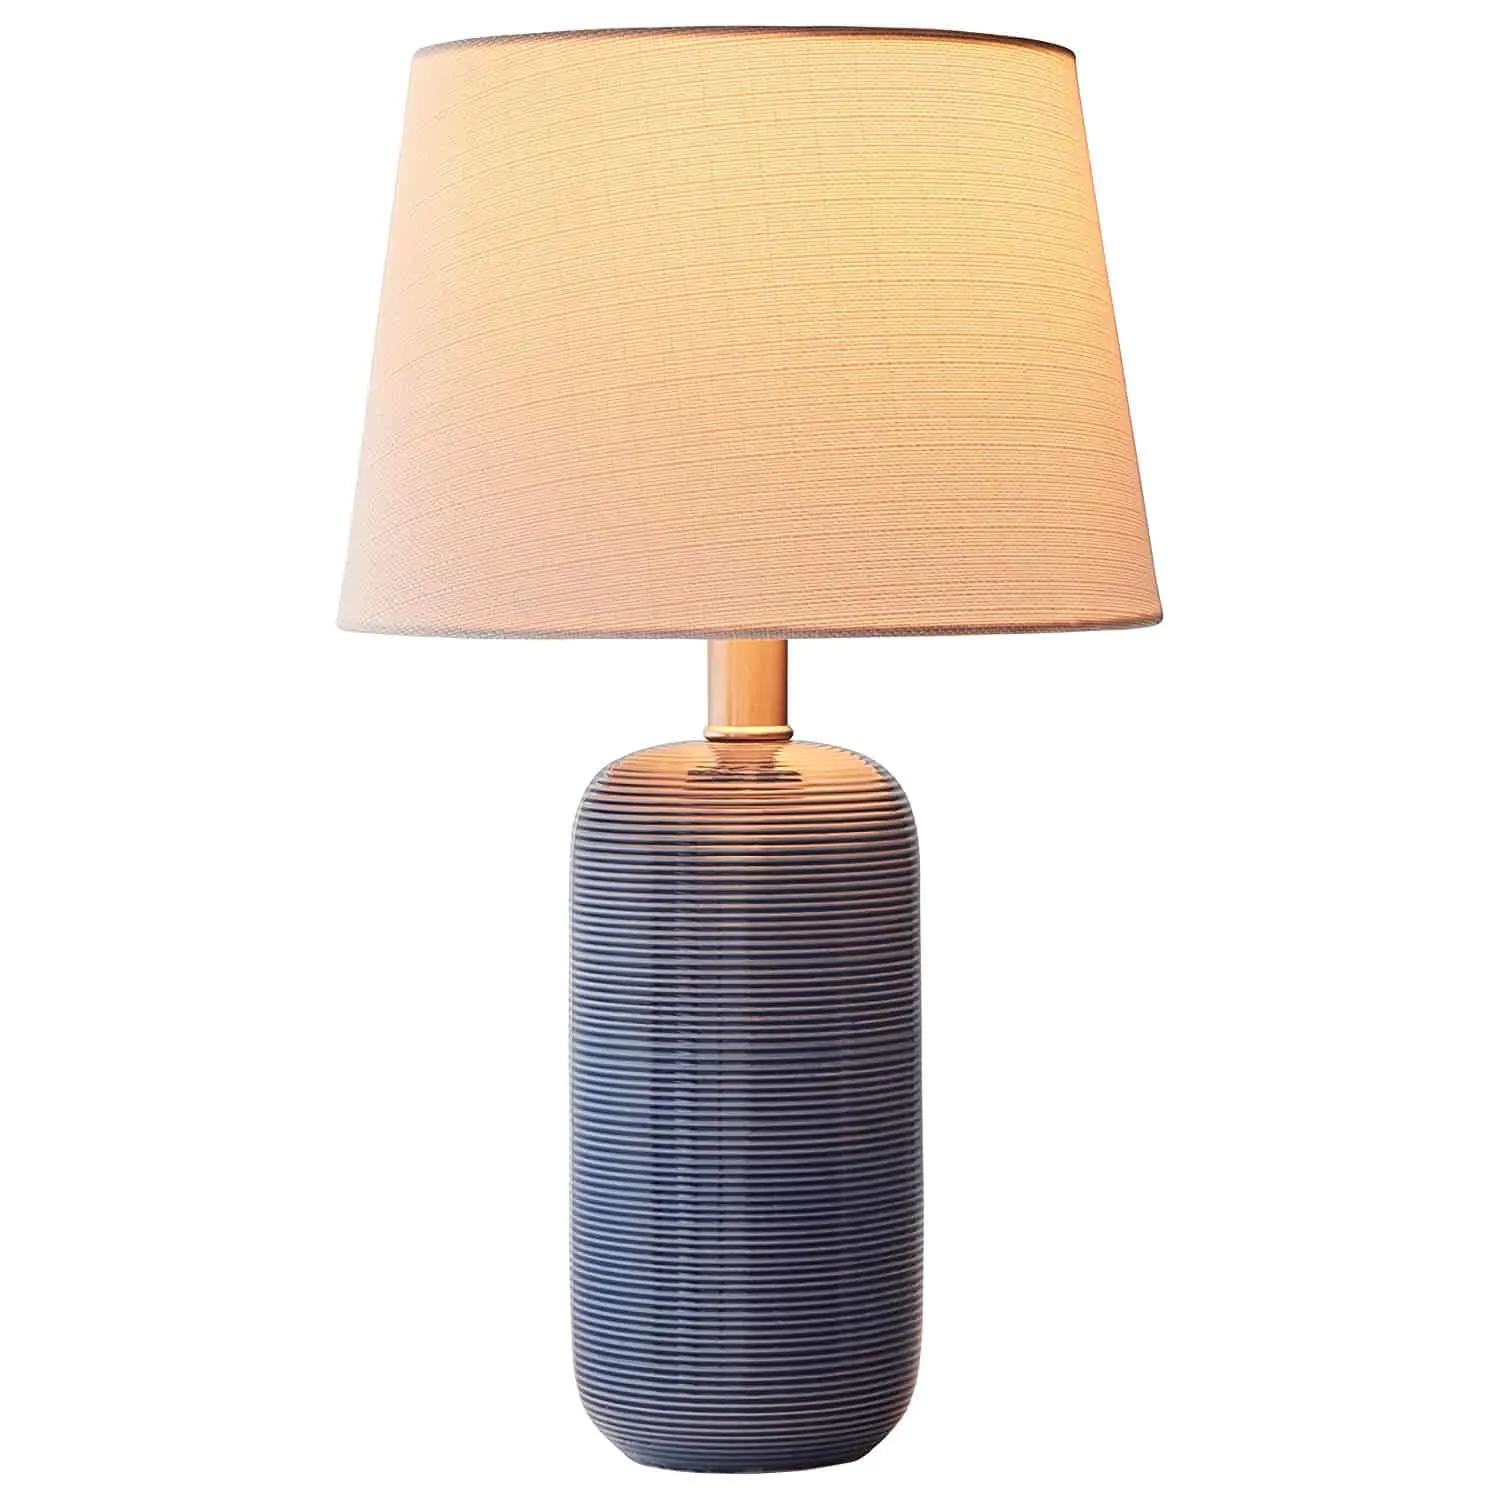 Stone & Beam Leland Modern Textured Table Lamp